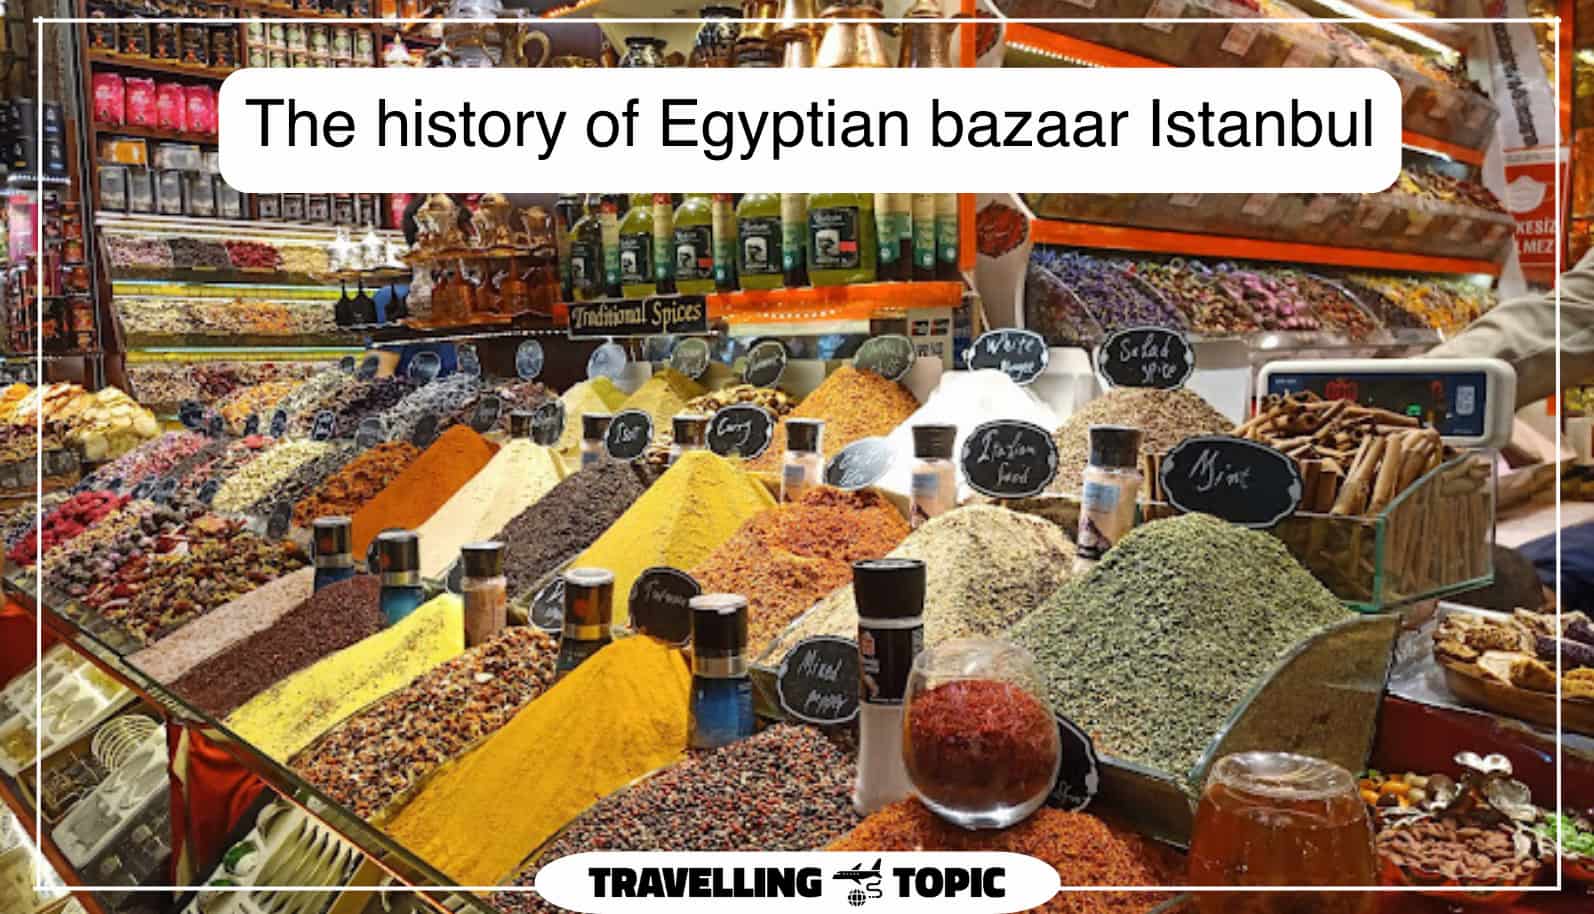 The history of Egyptian bazaar Istanbul